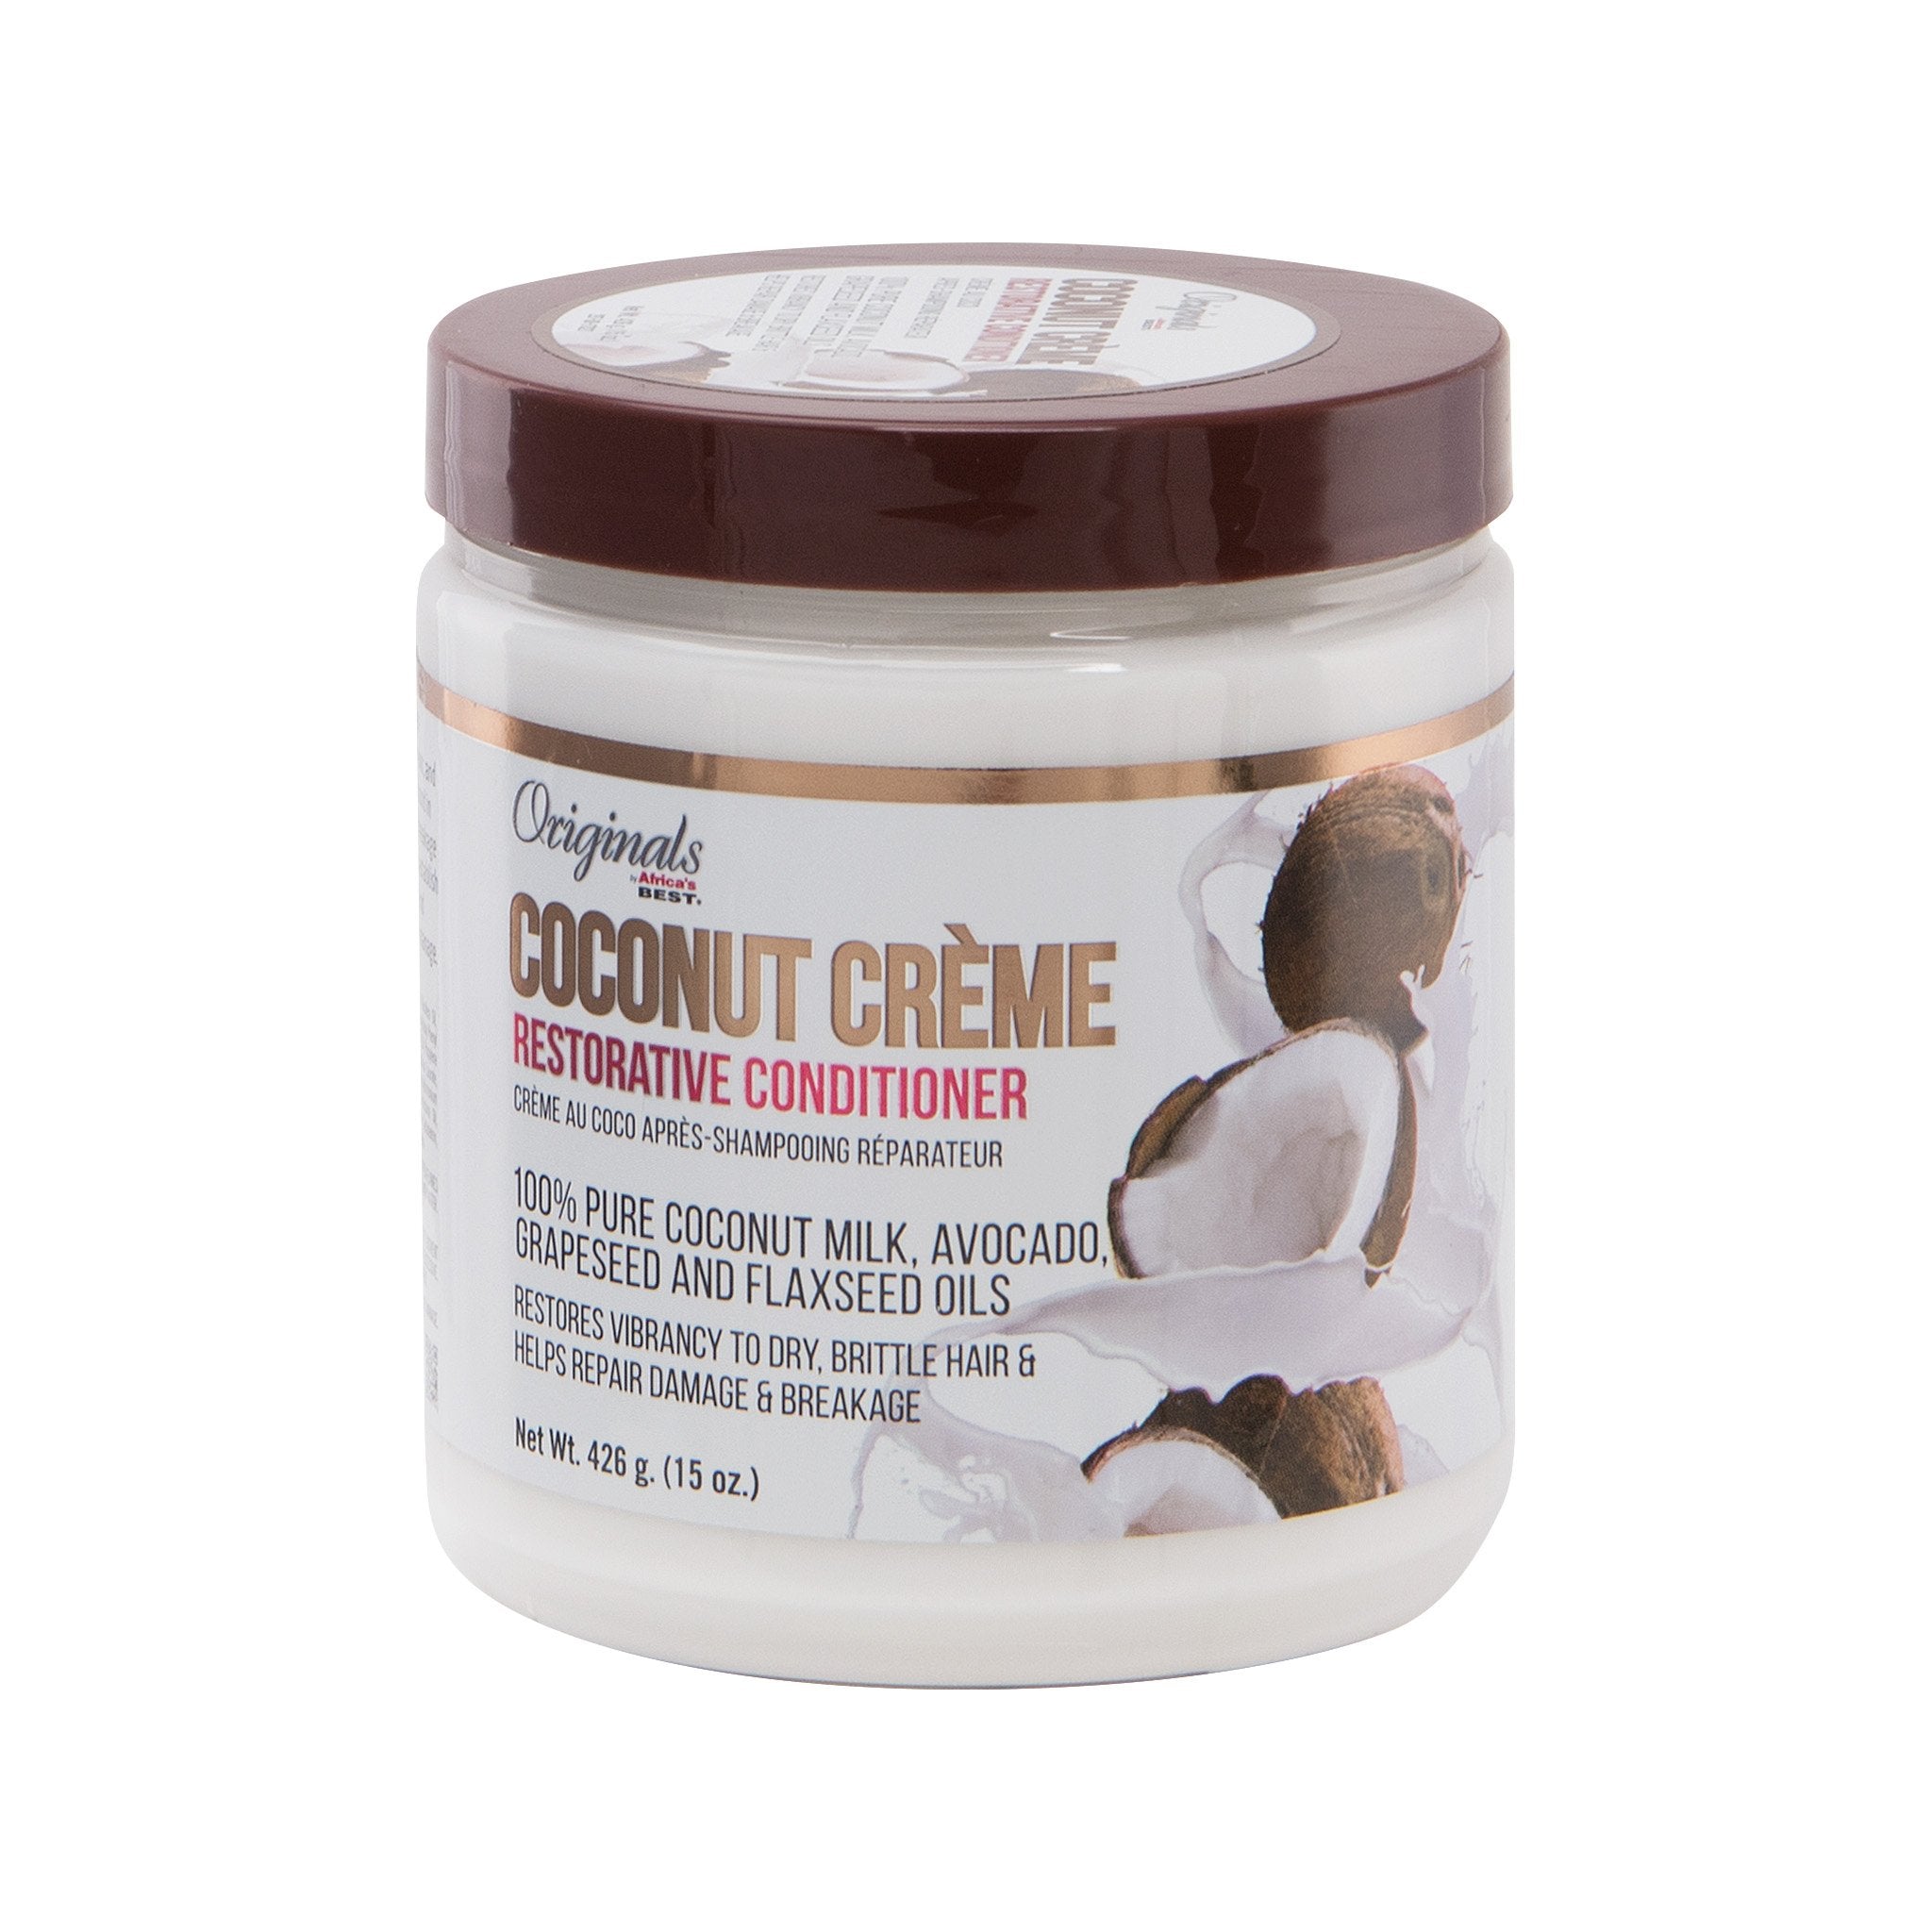 Originals Coconut Crème Restorative Conditioner - 426g 6-Pack